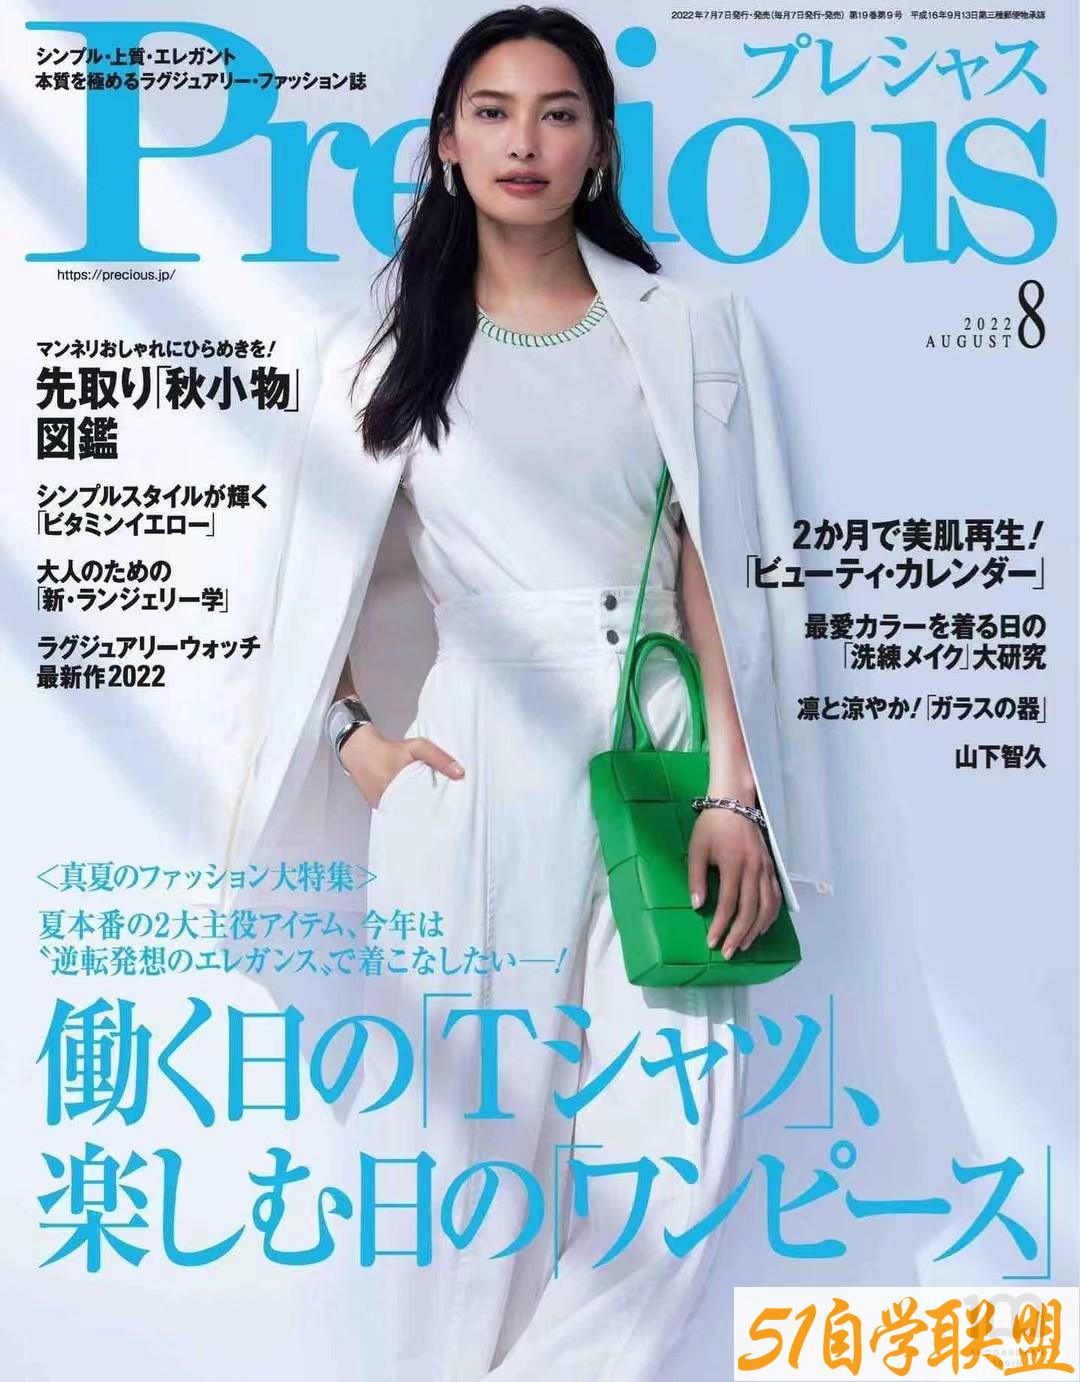 Precious 2022年08月日本女装时尚潮流搭配杂志-资源目录圈子-课程资源-51自学联盟